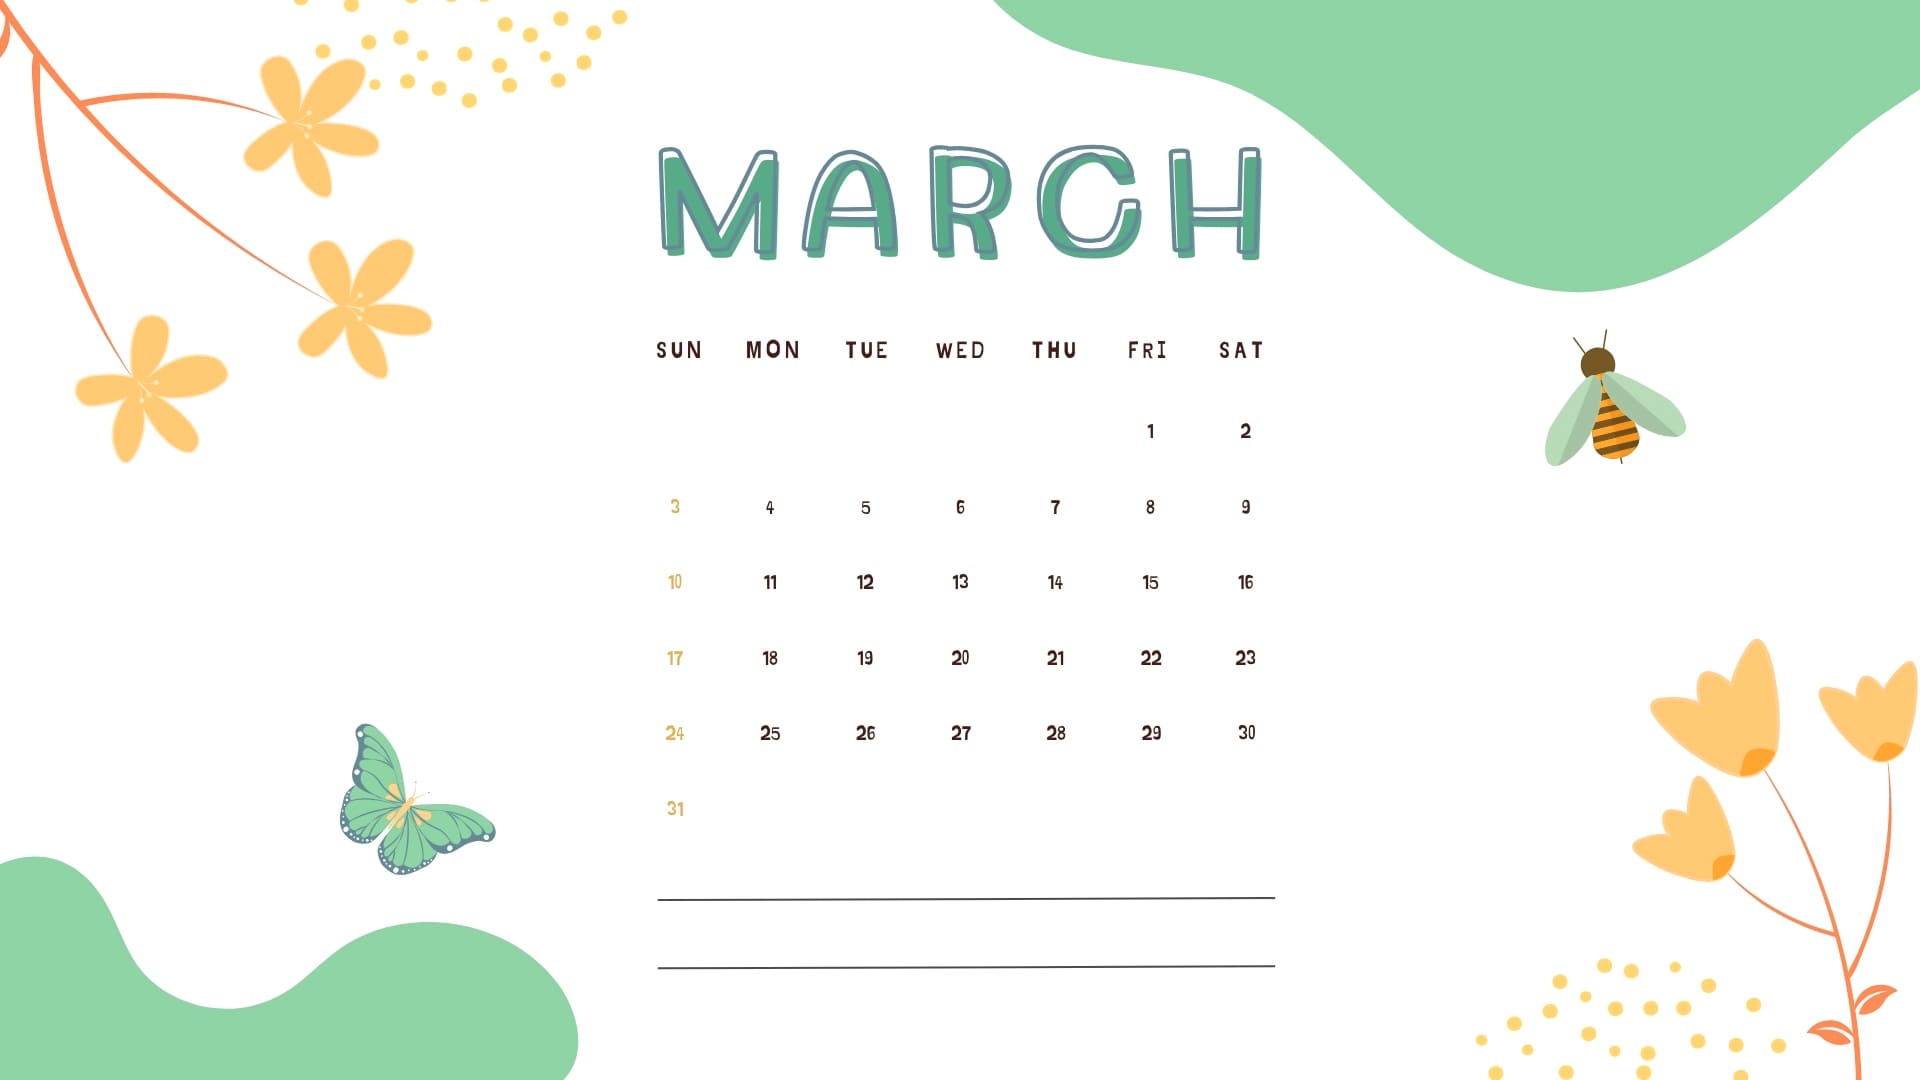 March 2024 Calendar Wallpaper TubeWP